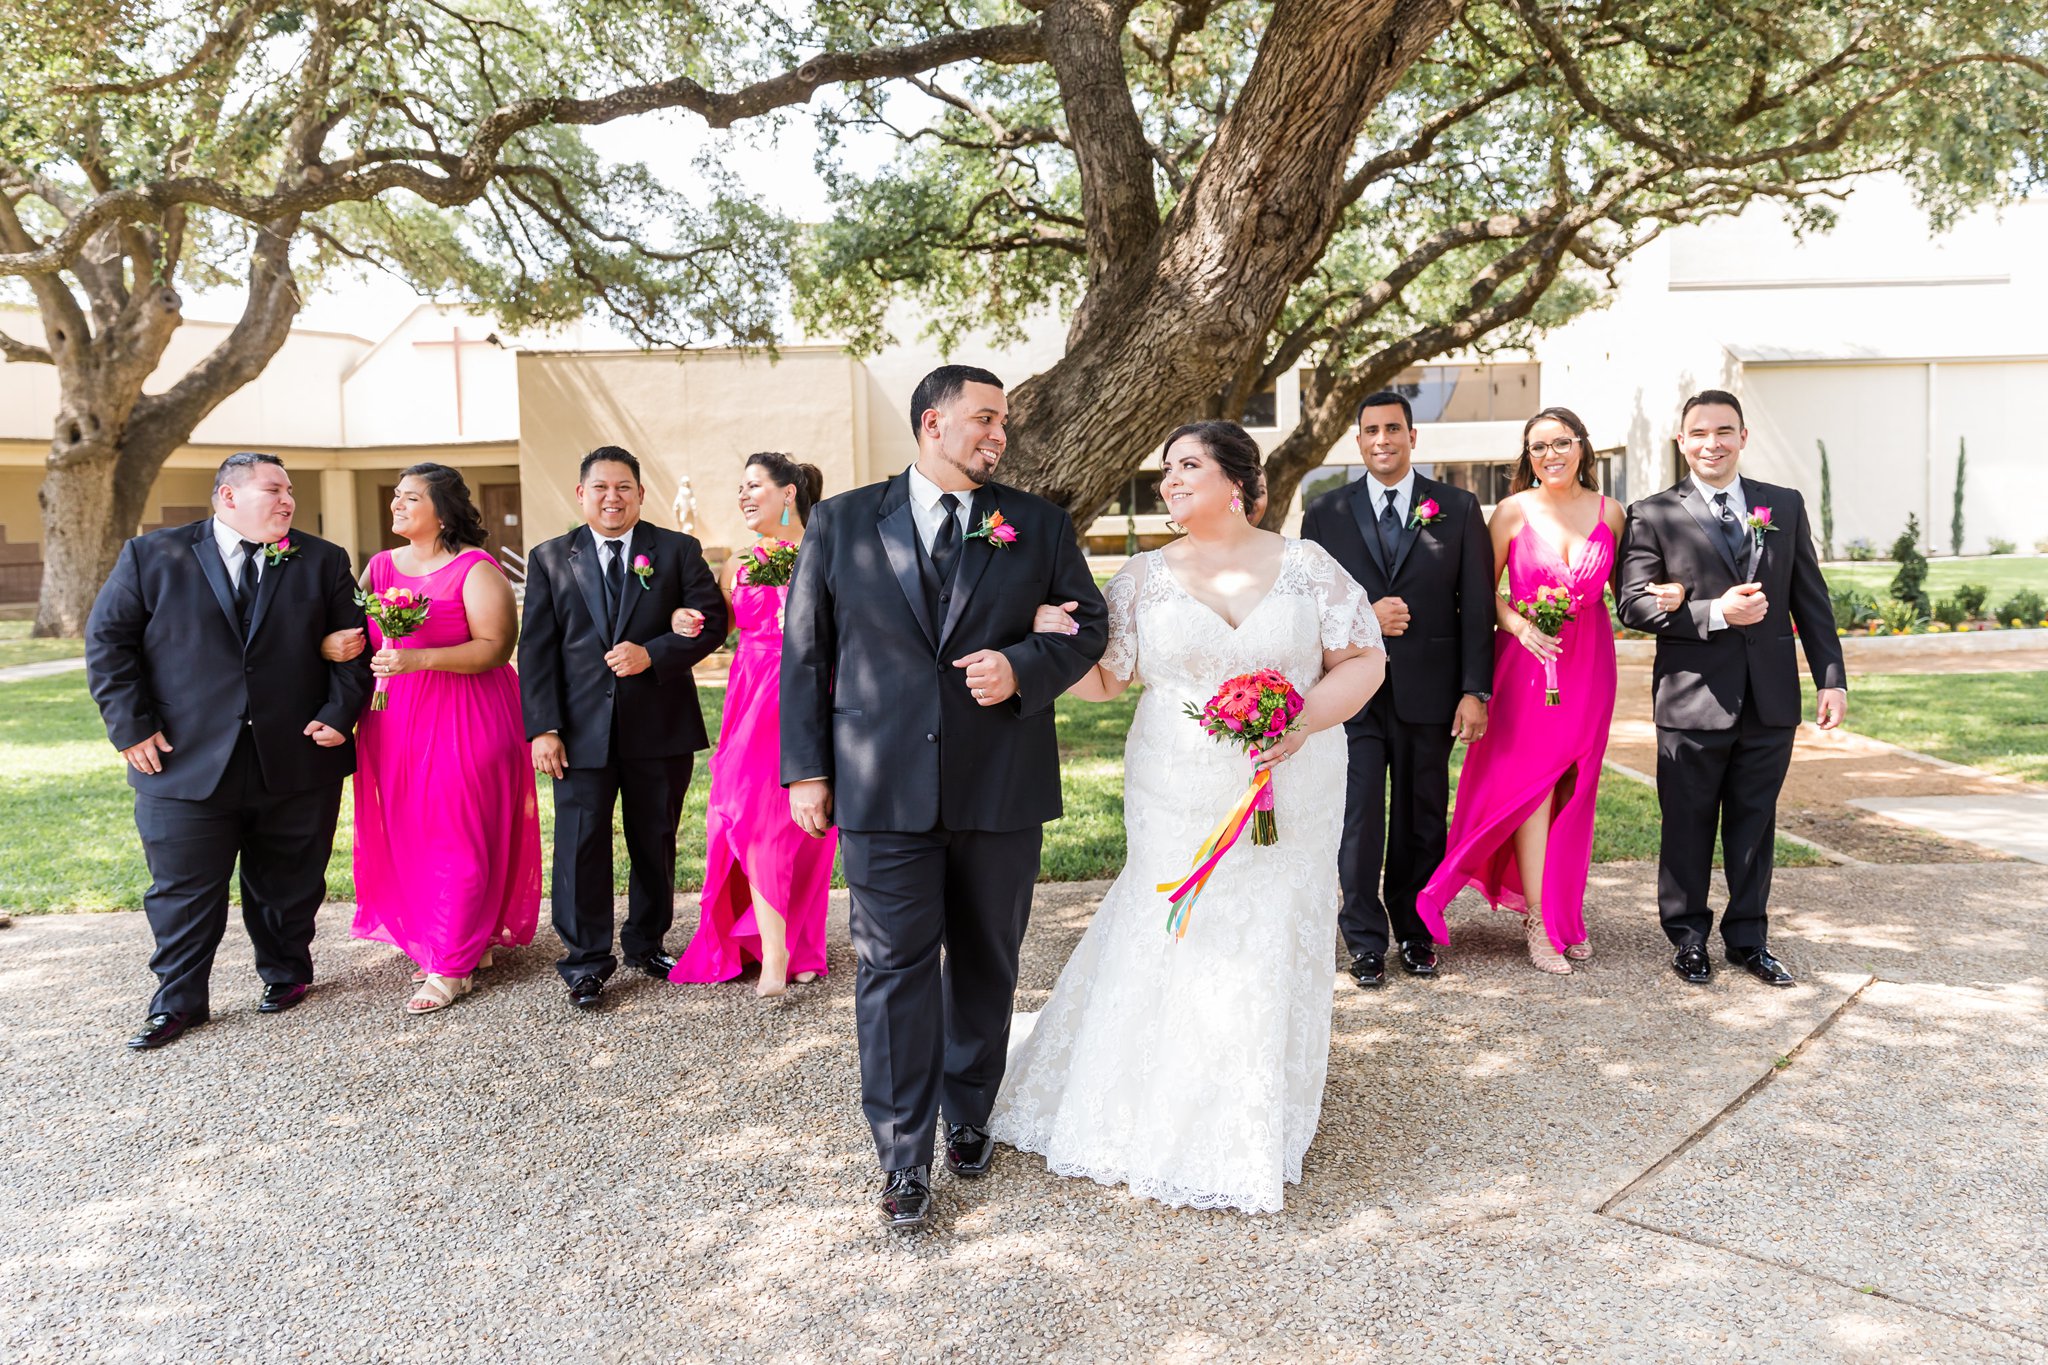 A Fiesta Themed Wedding at Casa Hernan in San Antonio, TX by Dawn Elizabeth Studios, San Antonio Wedding Photographer